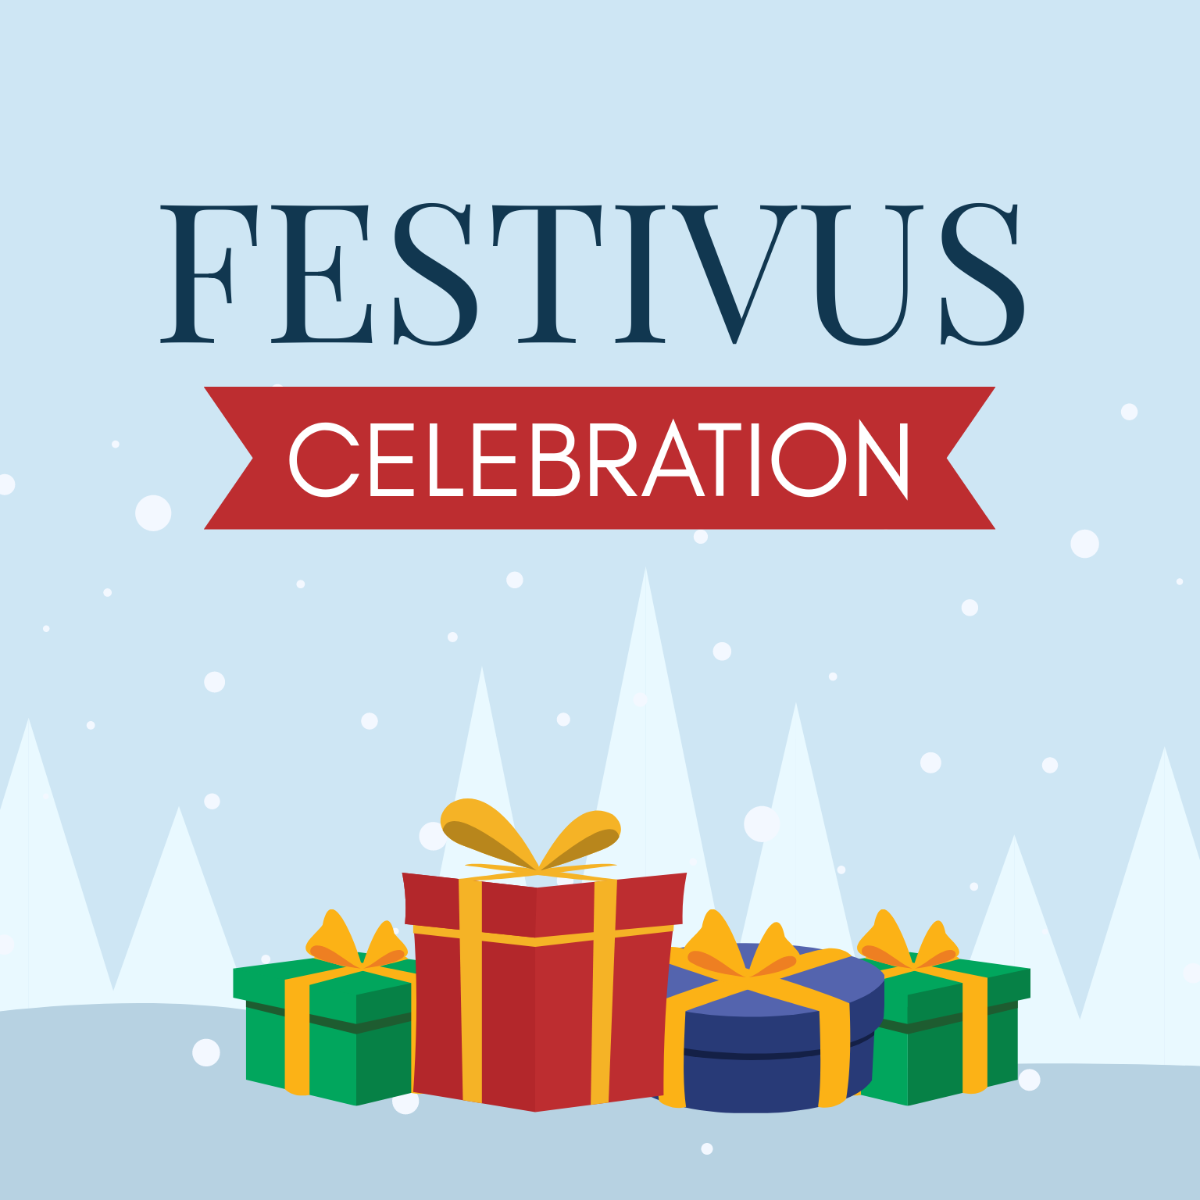 Festivus Celebration Vector